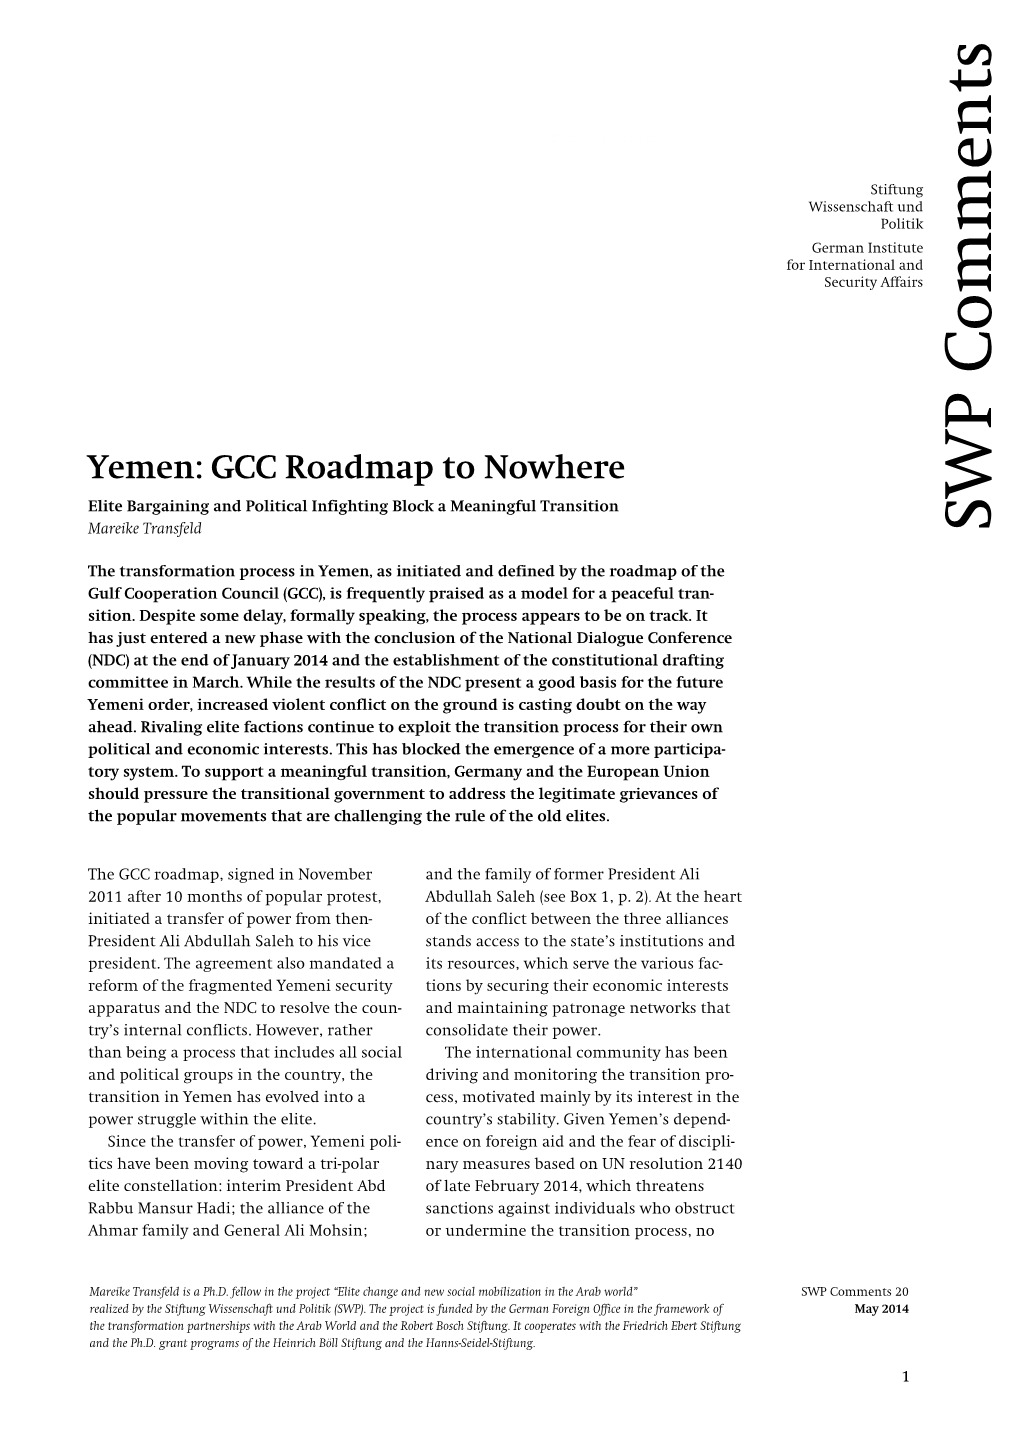 Yemen's GCC Roadmap to Nowhere. Elite Bargaining and Political